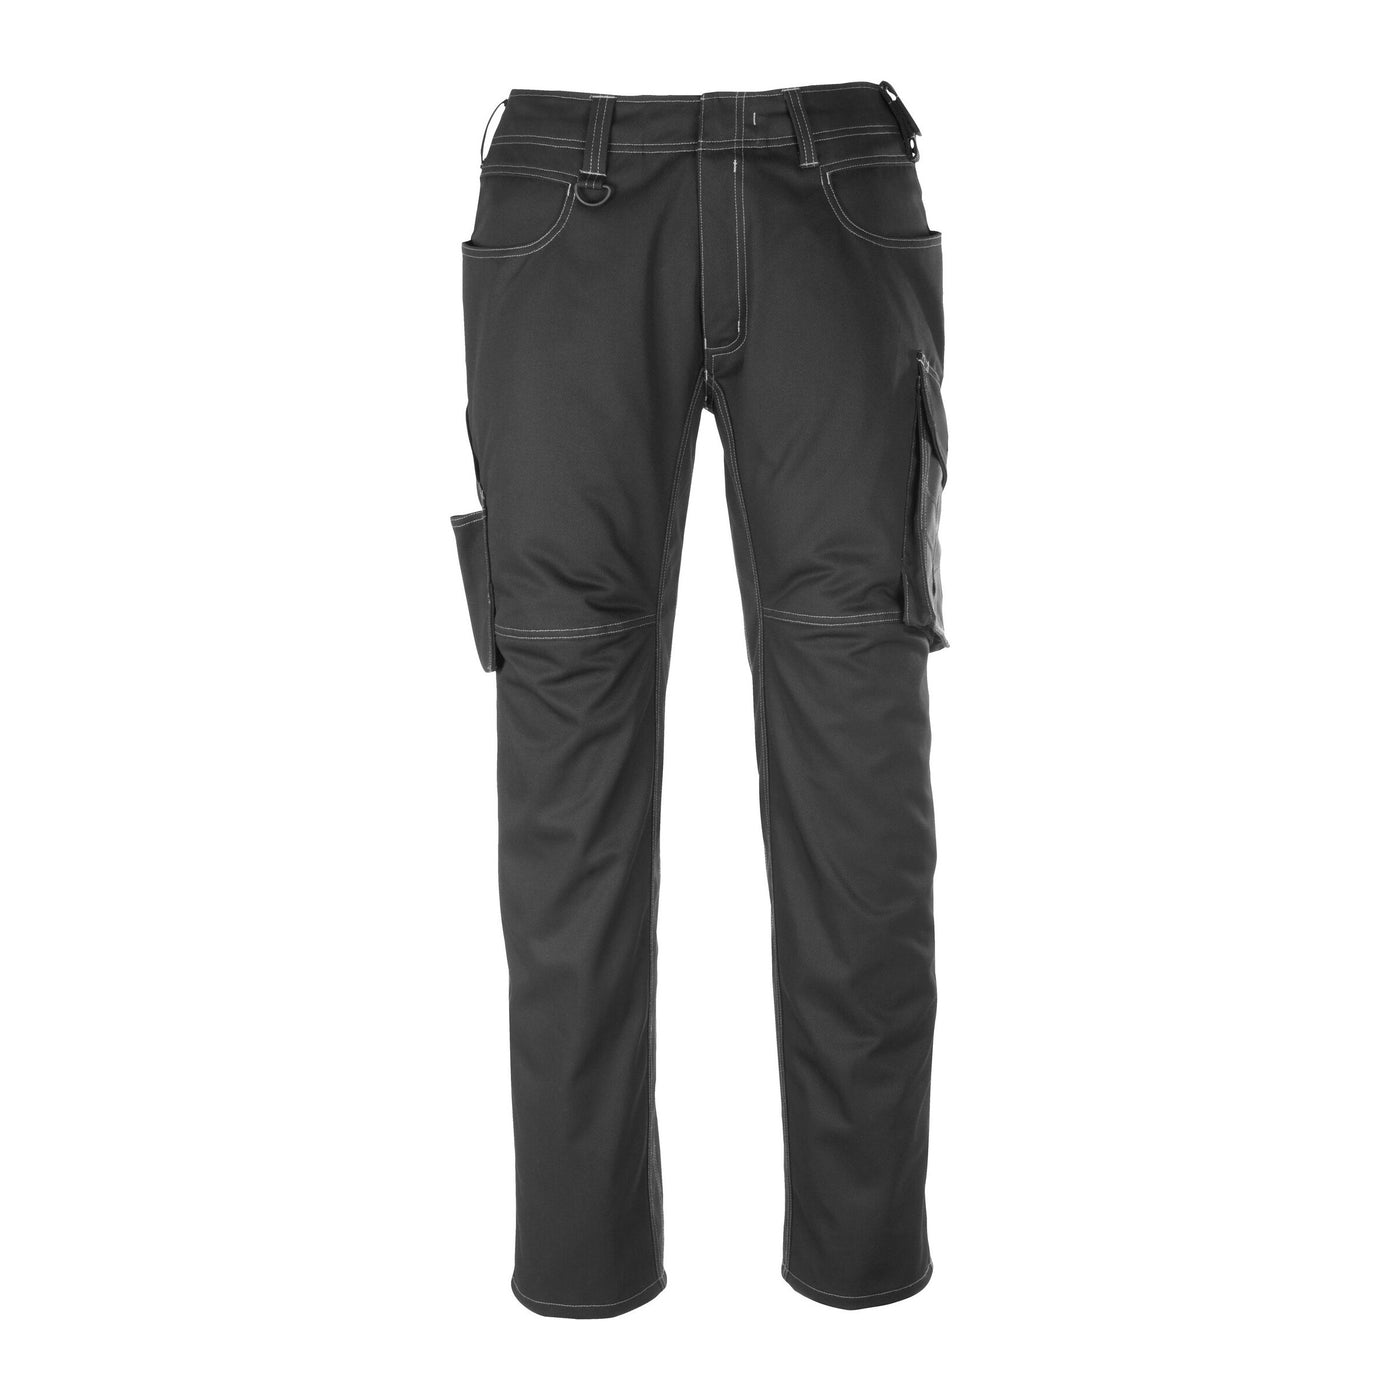 Mascot Dortmund Trousers Multi-Pocket 12079-203 Front #colour_black-dark-anthracite-grey